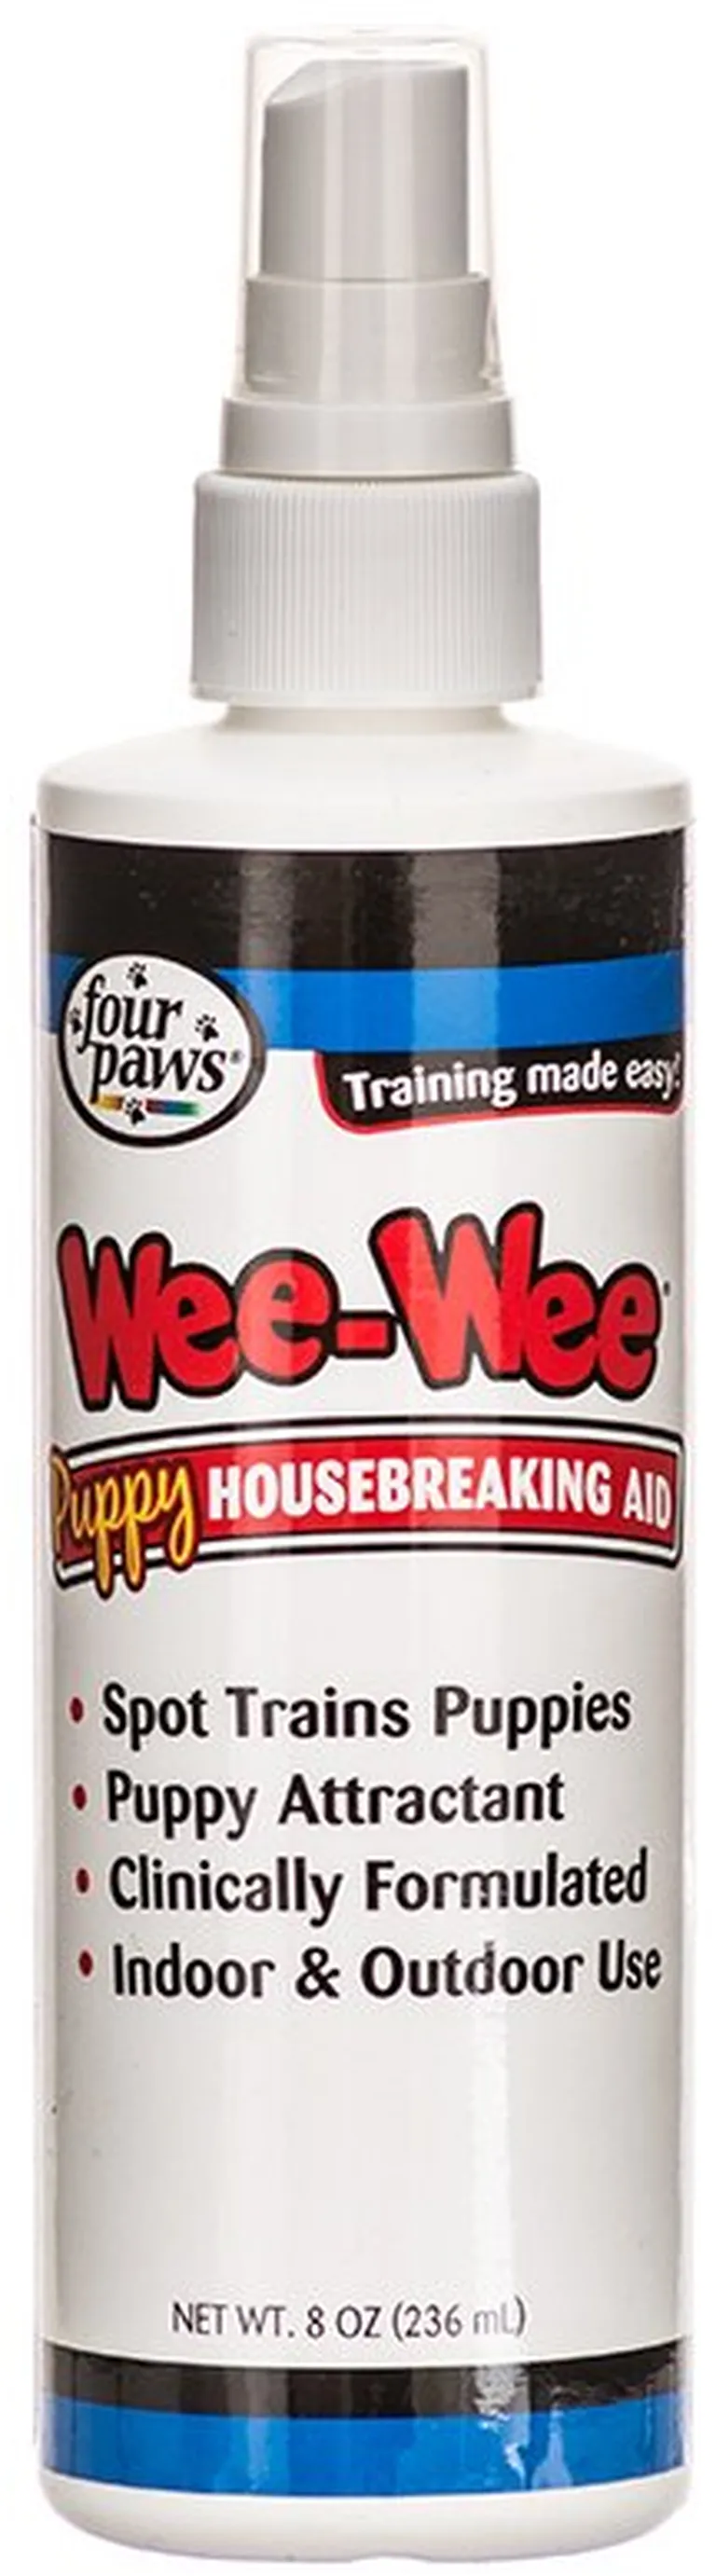 Four Paws Wee Wee Housebreaking Aid Pump Spray Photo 1